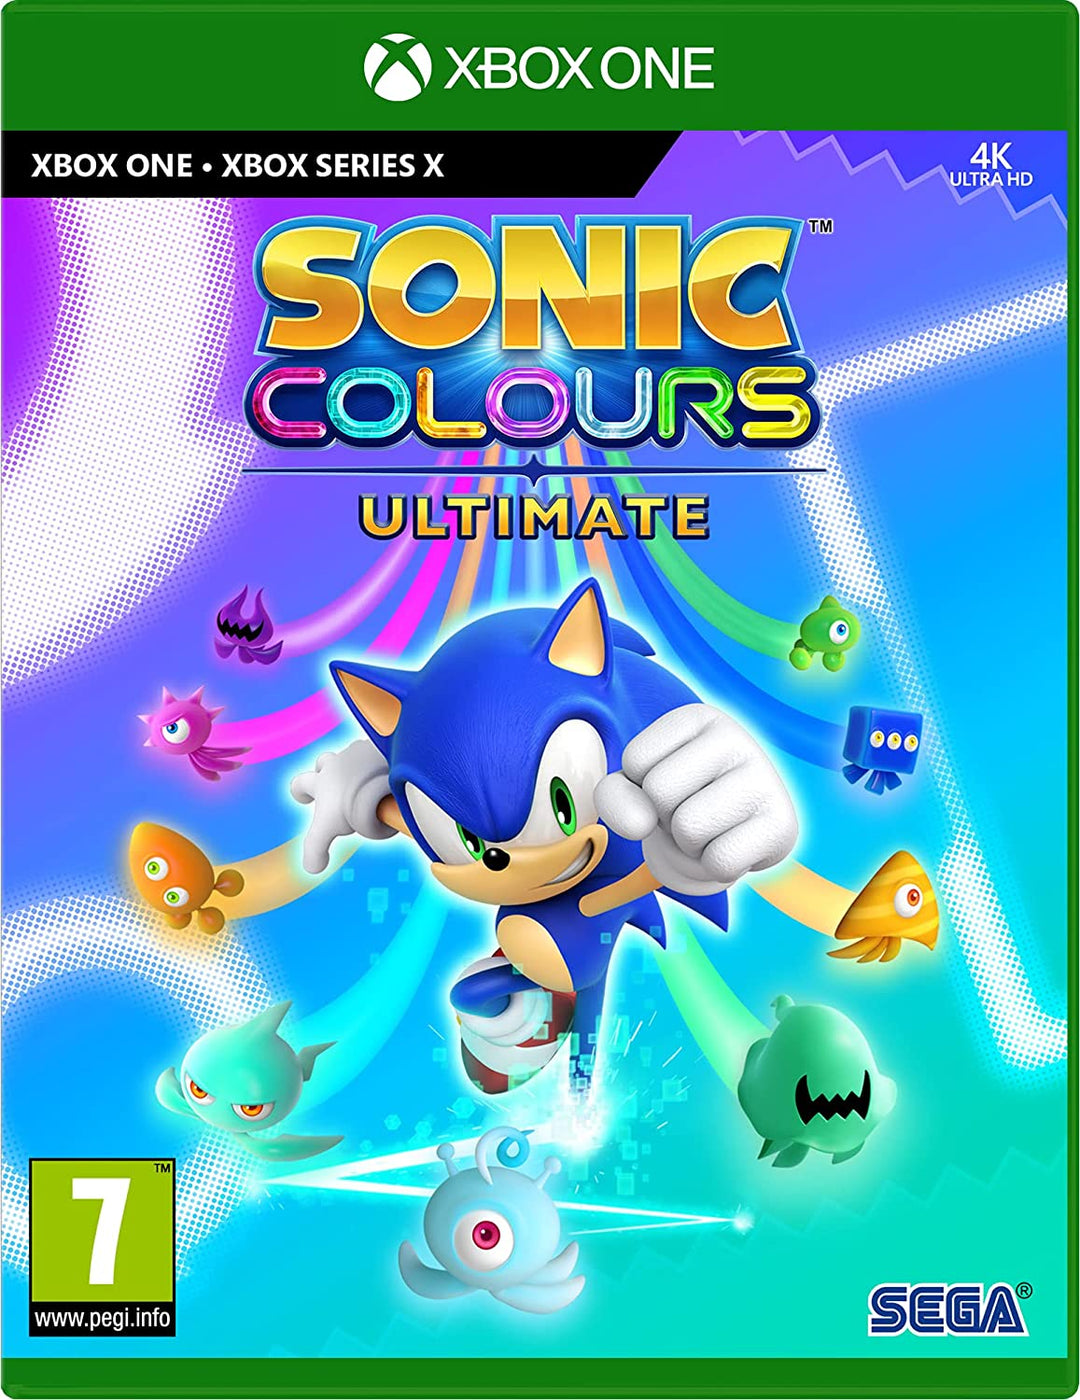 SEGA SPIELE Sonic Colors Ultimate (XONE/XSERIESX)